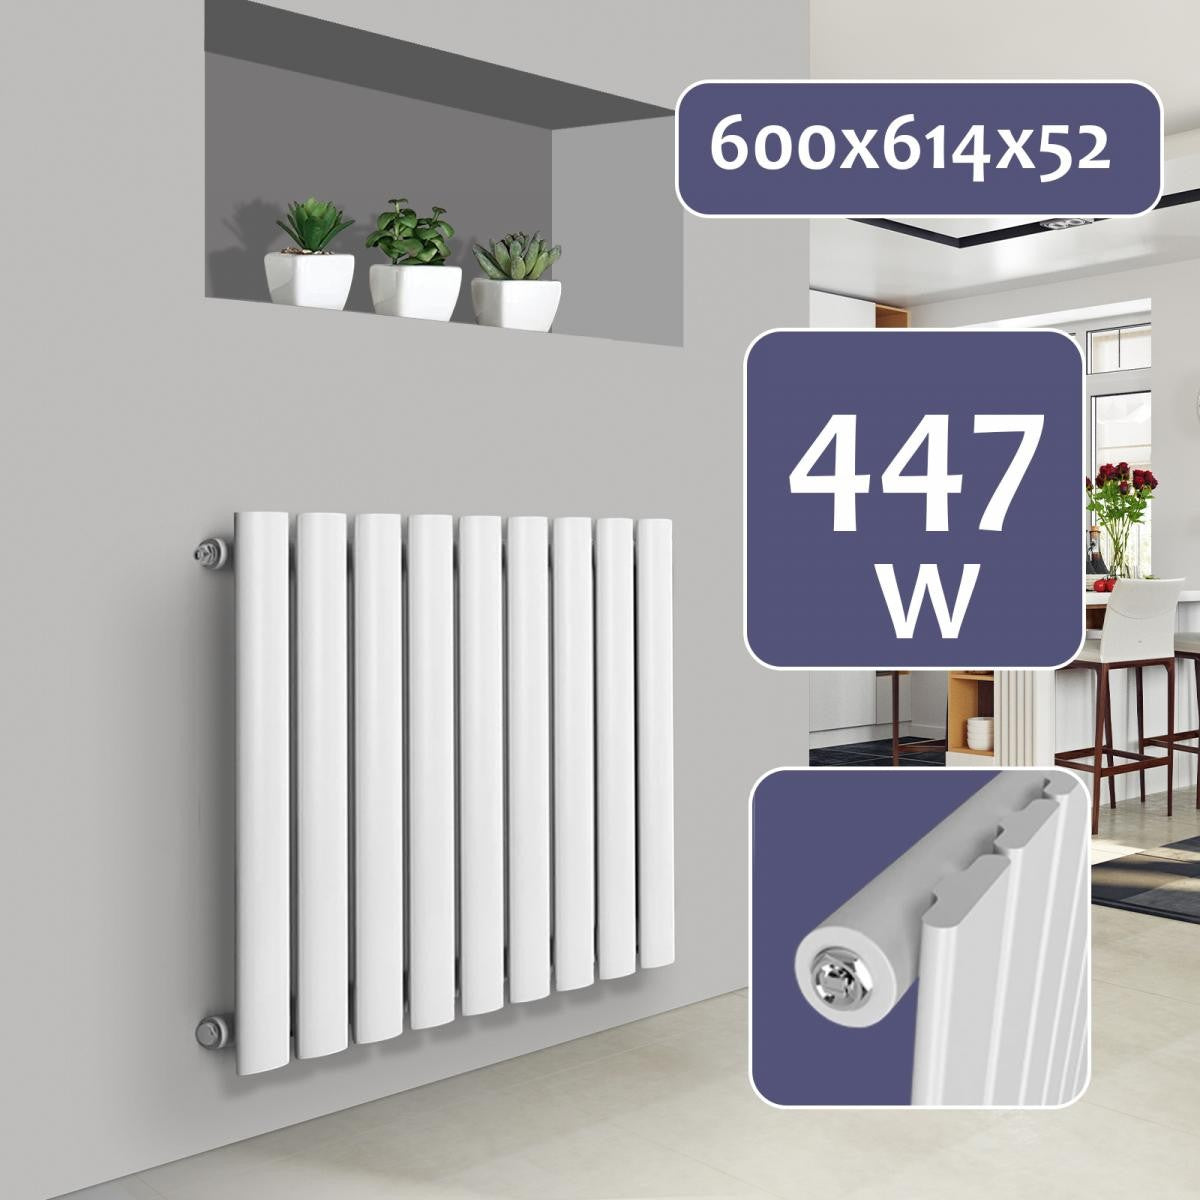 8: AquamarineÂ® radiator - vandret, enkeltlag, 9 segmenter, 600x614x52 mm, centralvarme, hvid